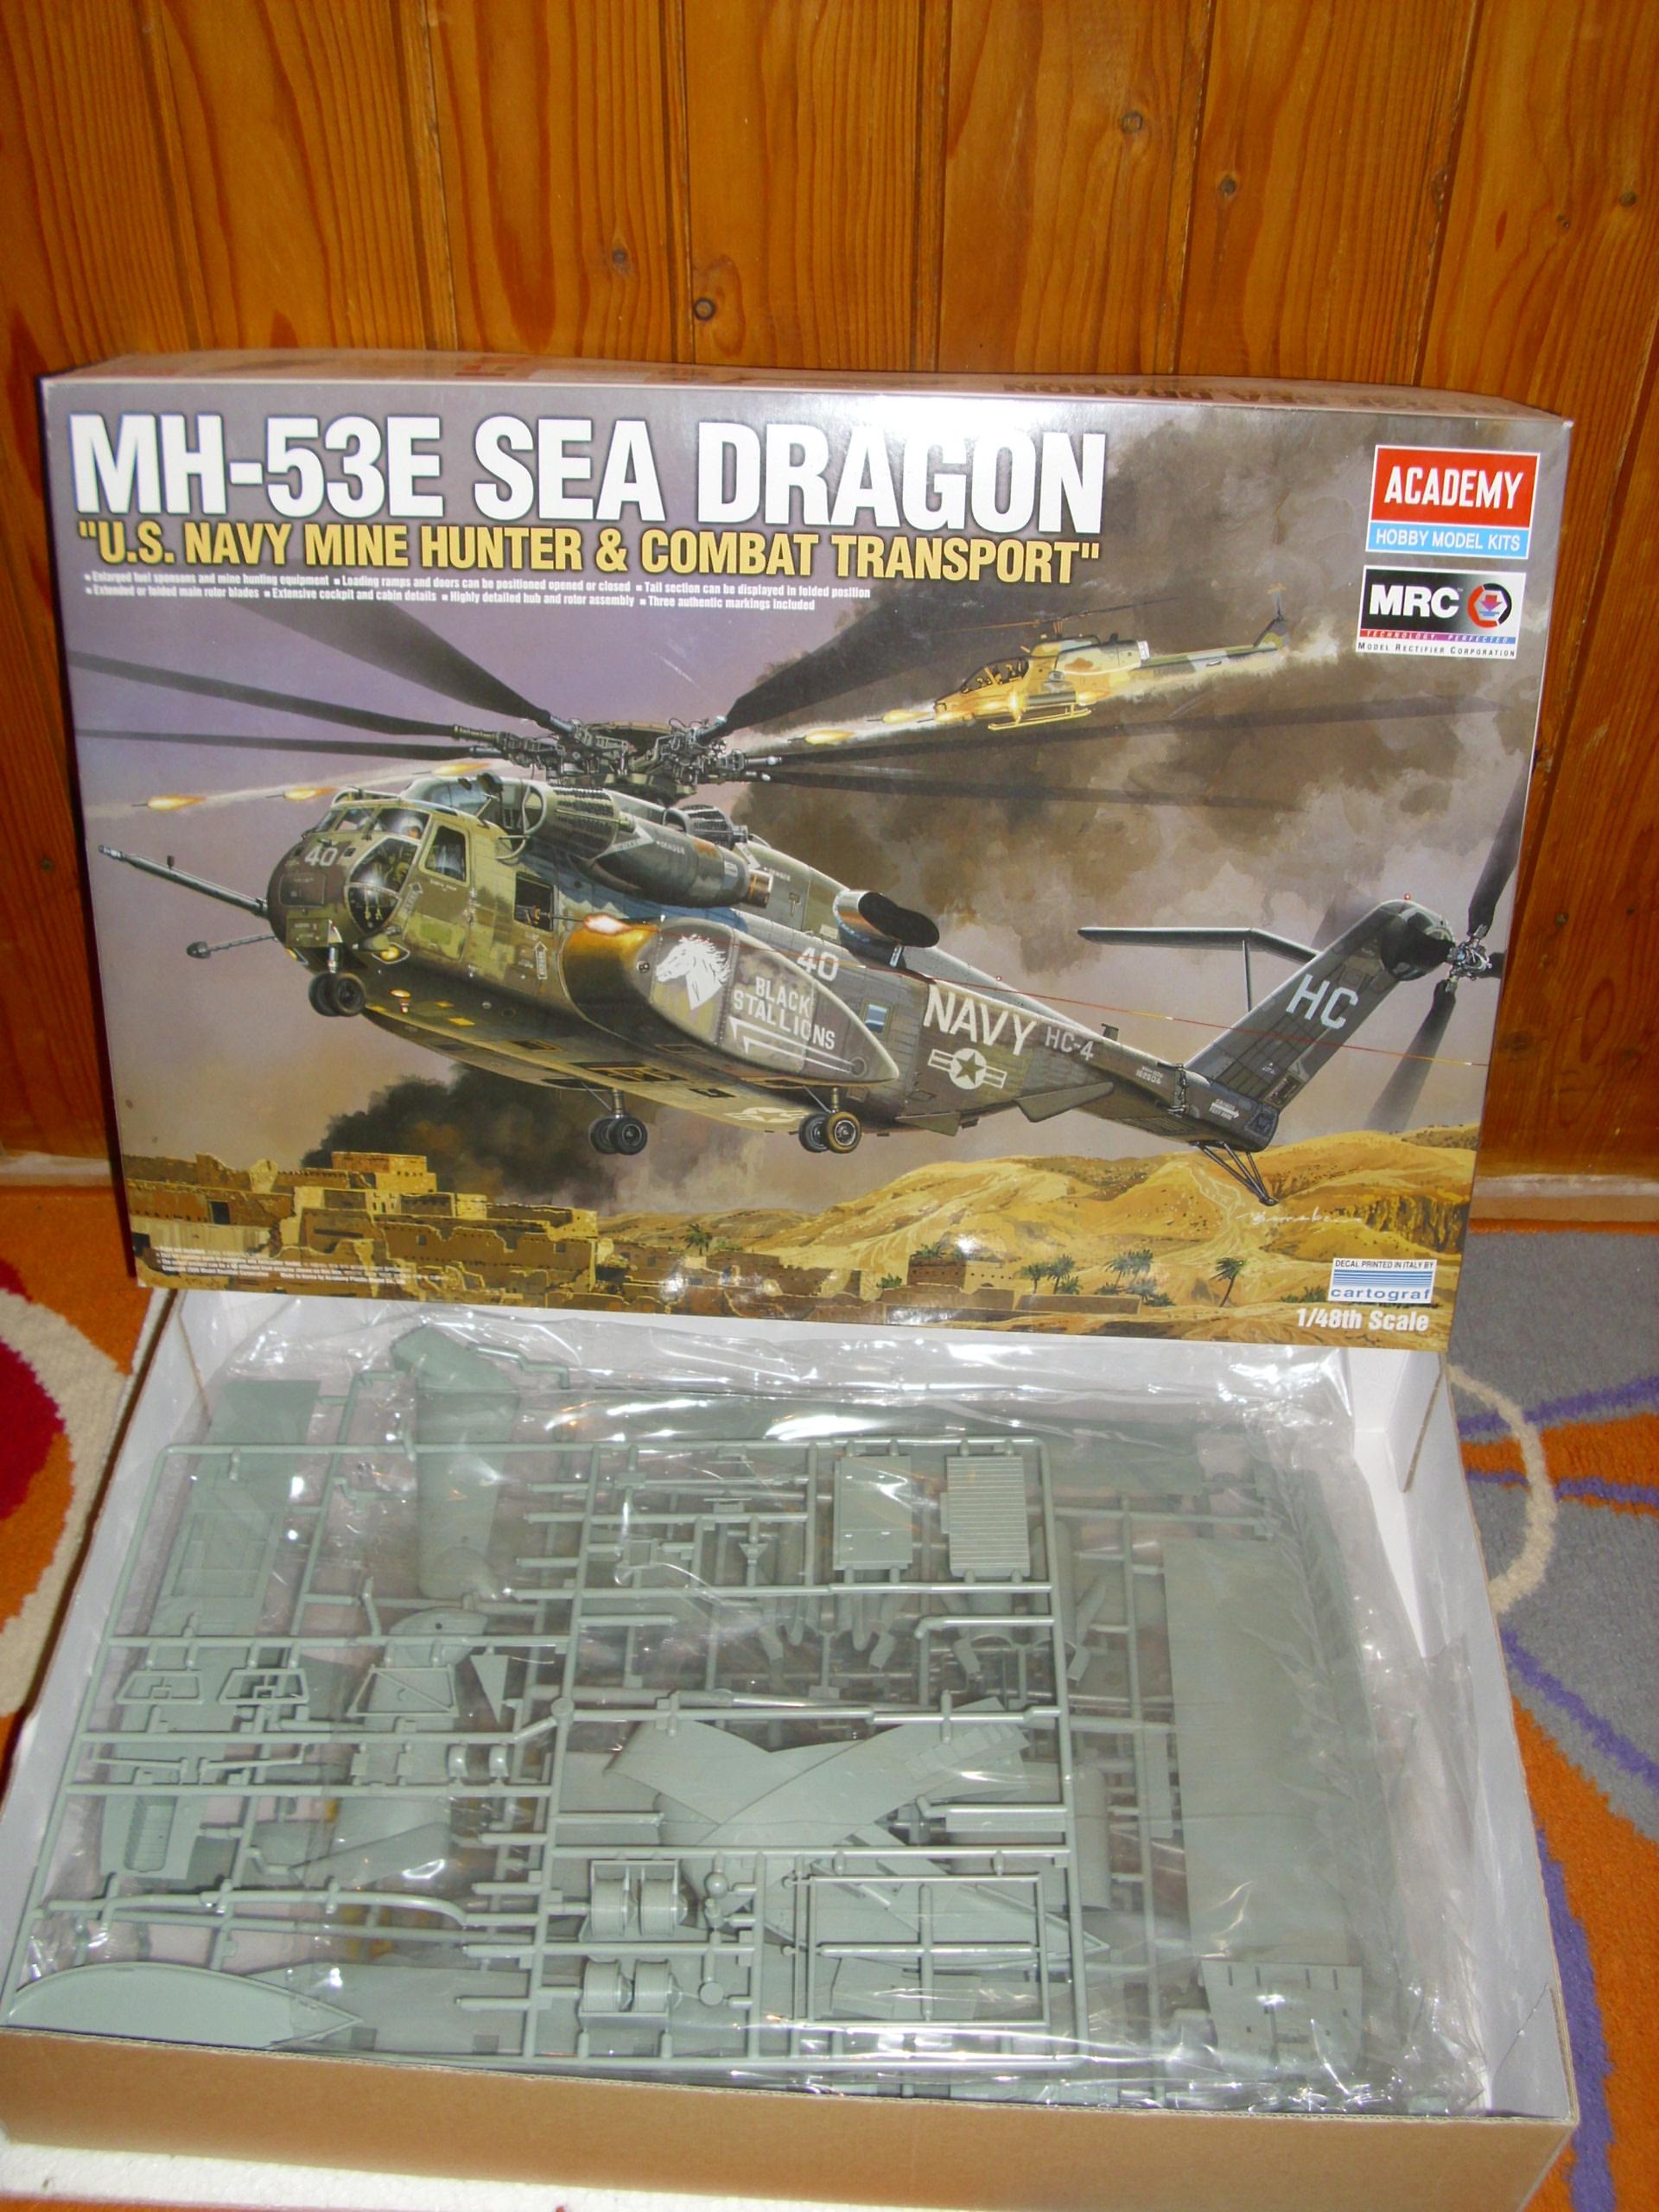 MH-53E Sea Dragon 1:48

16000ft